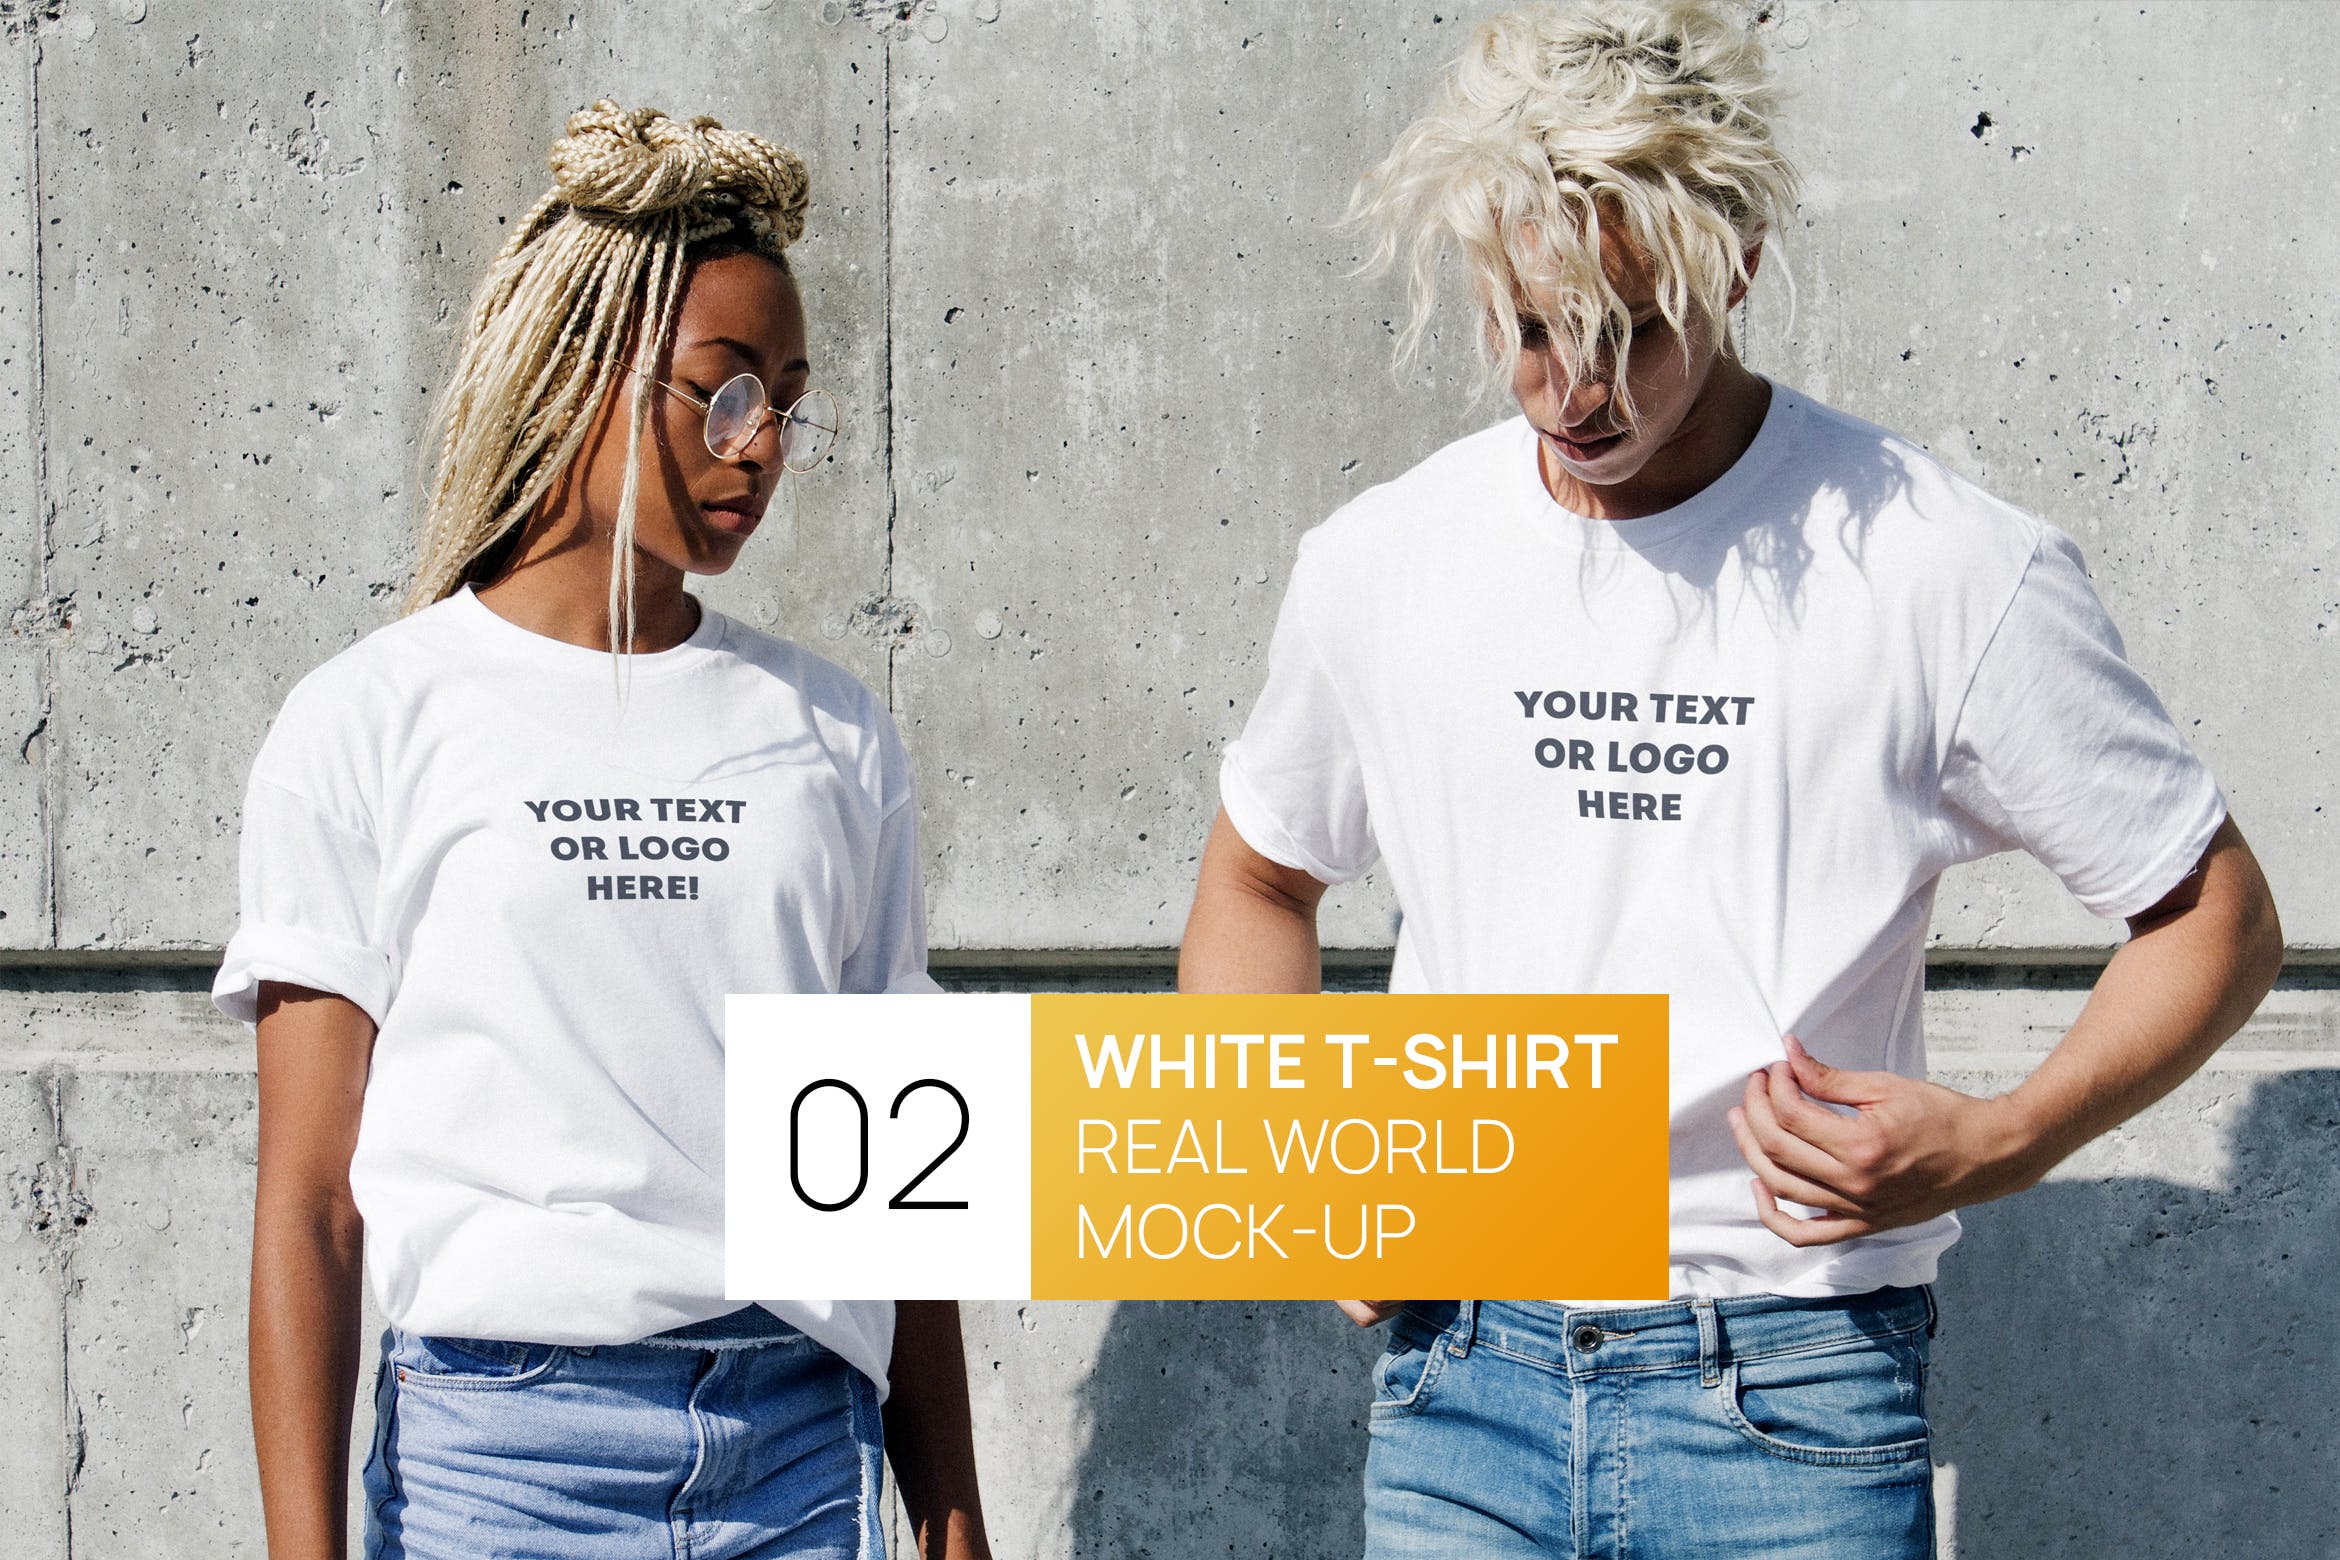 情侣T恤服装设计效果图样机蚂蚁素材精选 Two Persons White T-Shirt Real World Photo Mock-up插图